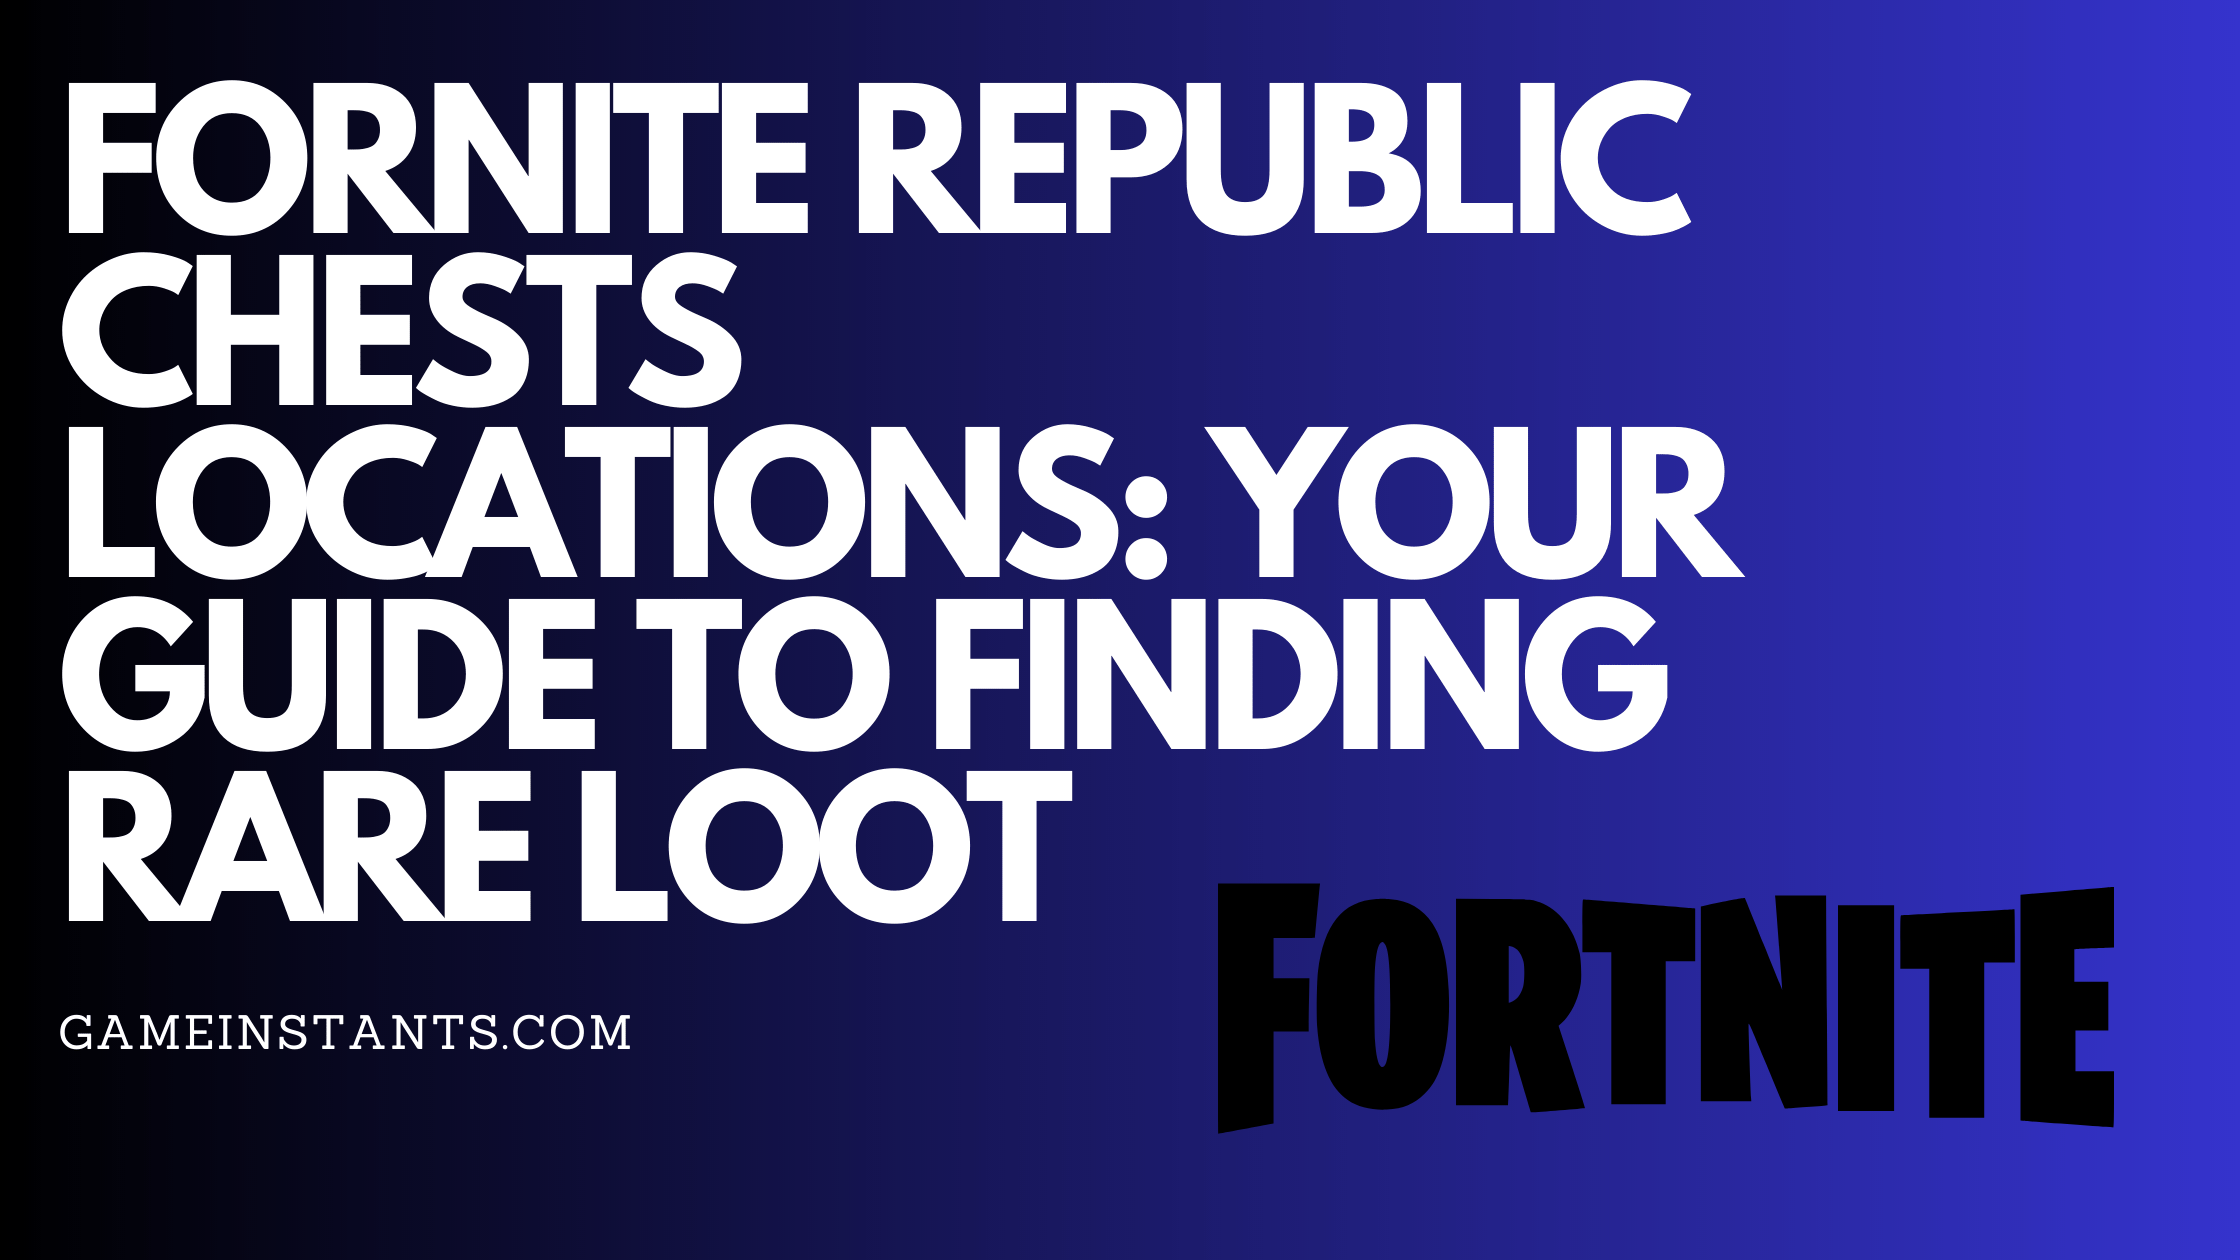 Fortnite Republic Chests Locations